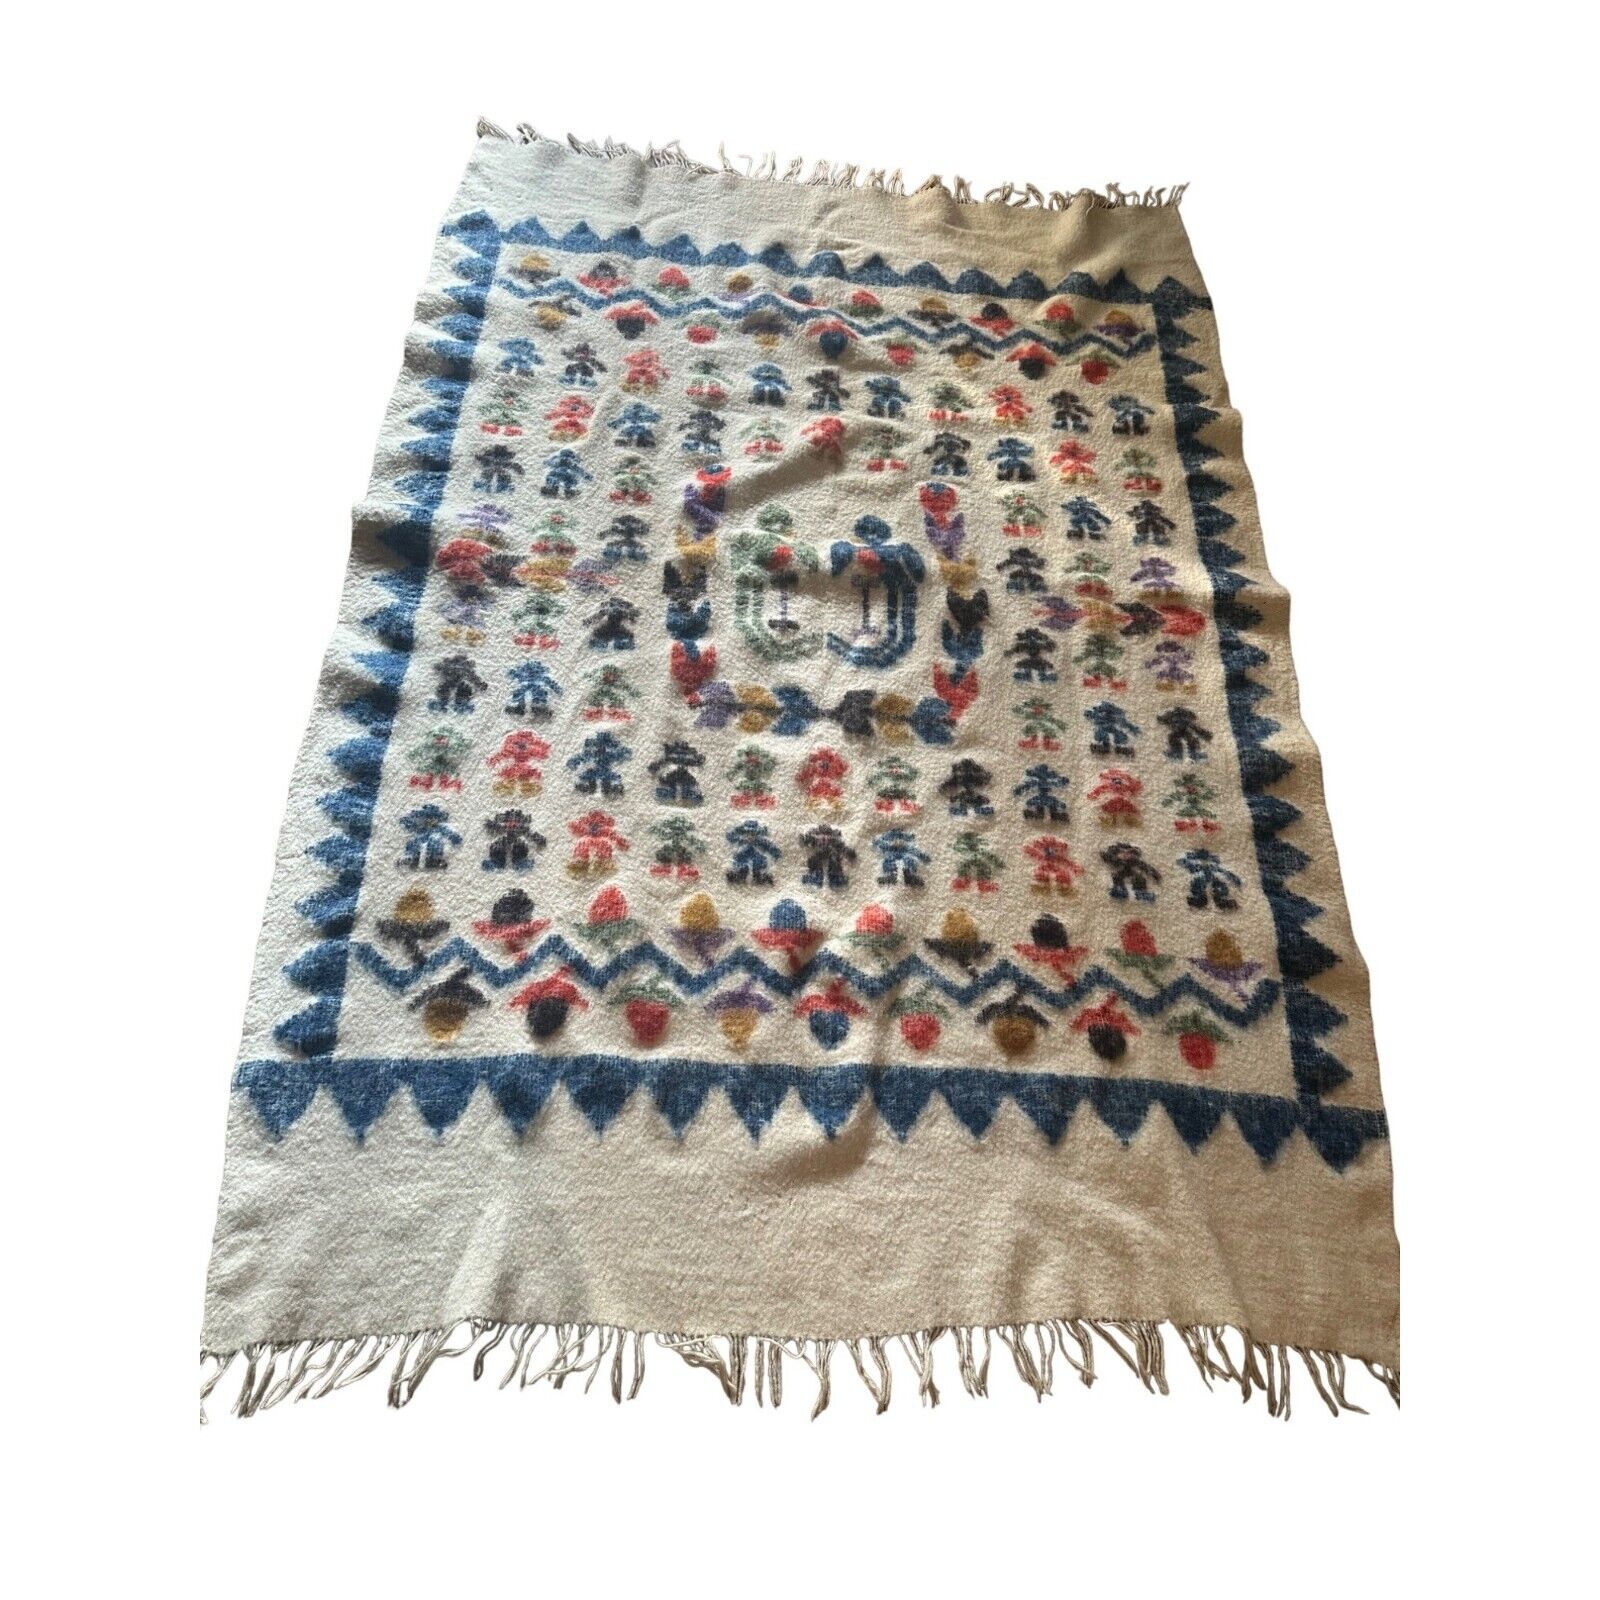 Vintage Guatemalan Wool Blanket Folk Art Early 20th century